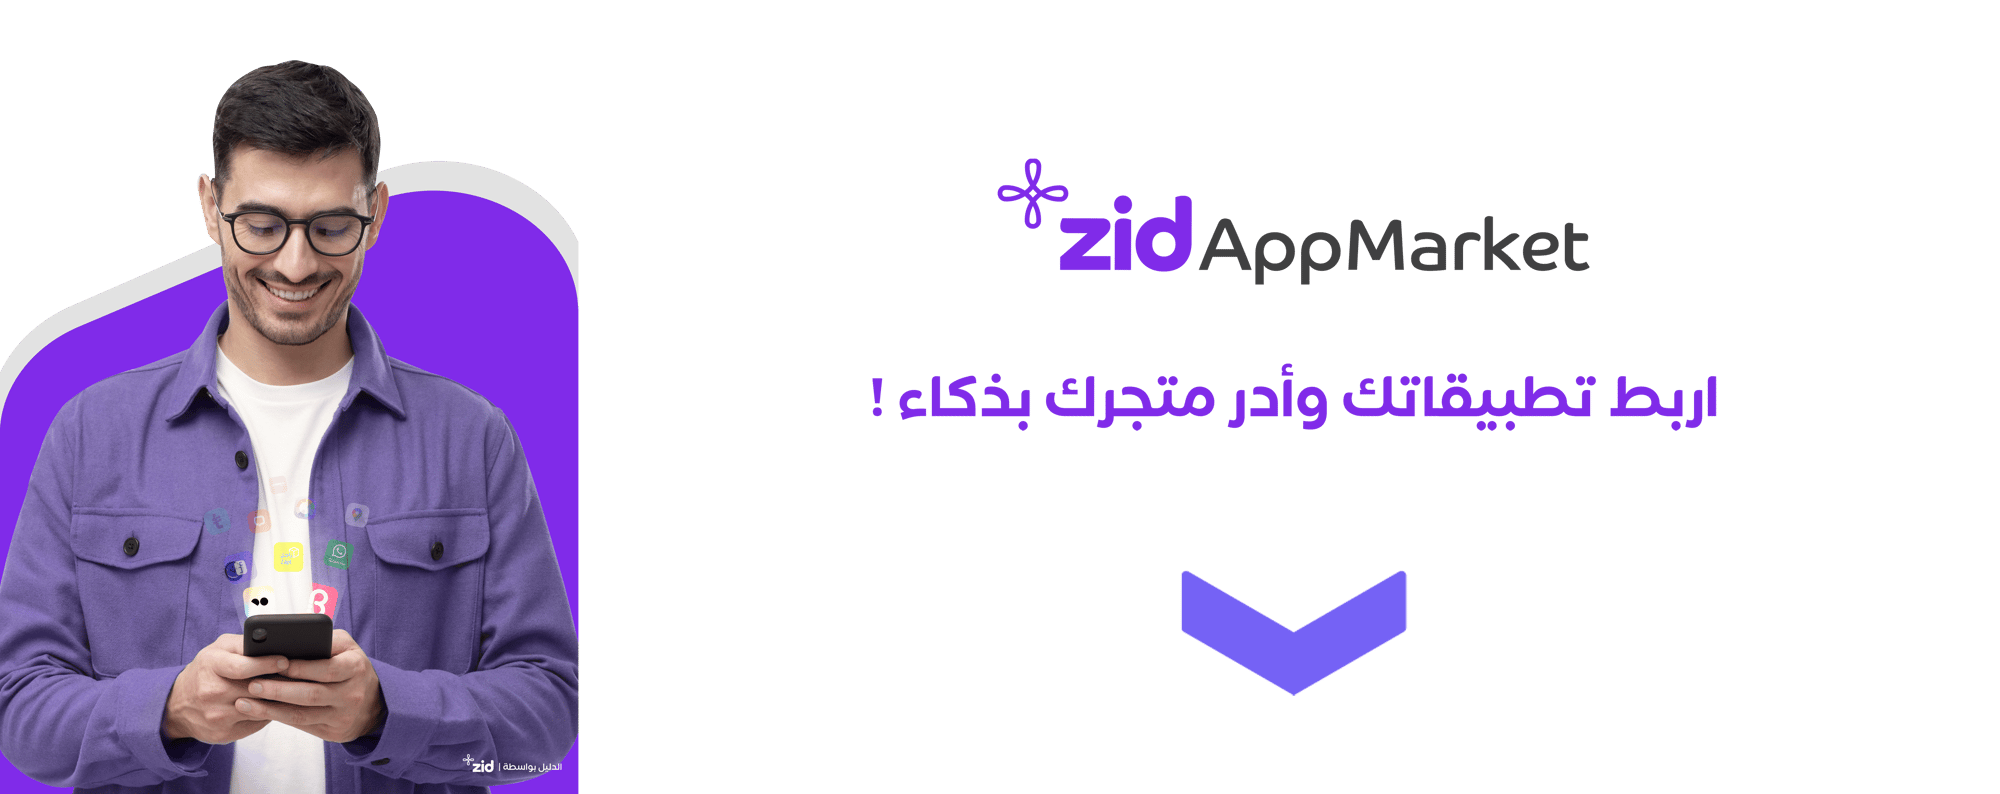 guide-for-zid-App-Market-1-1